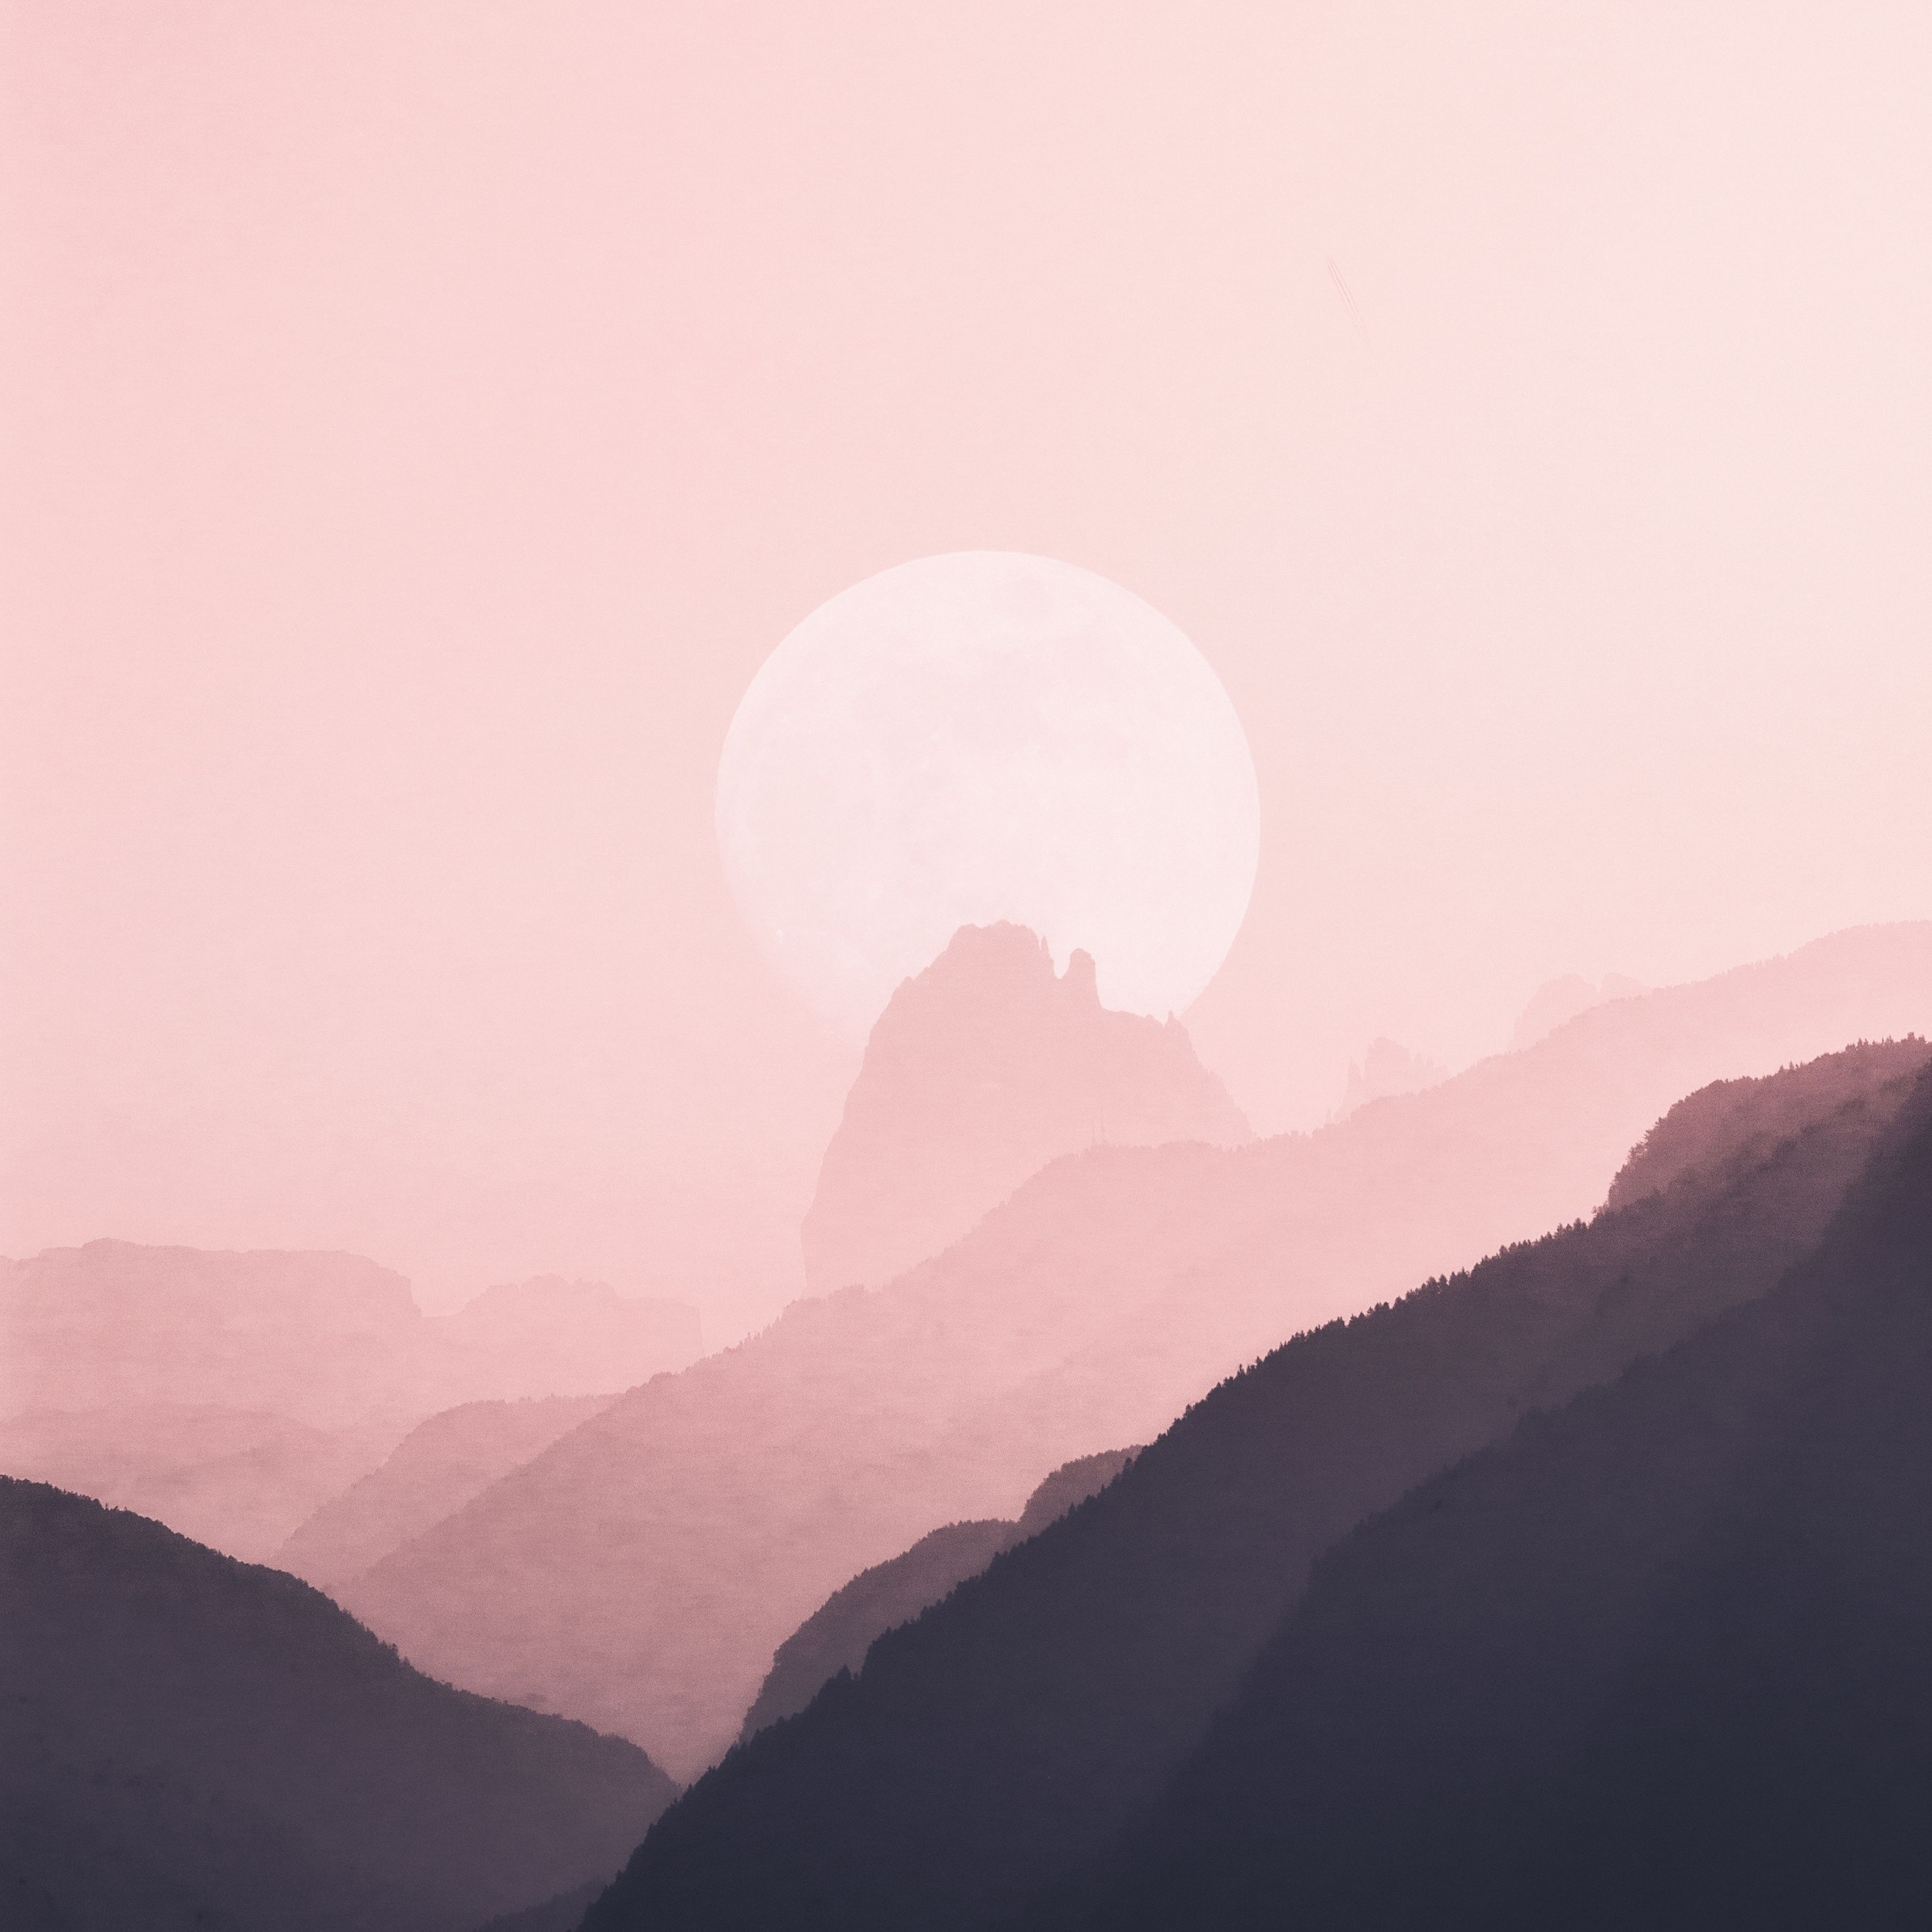 Download Minimal, horizon, nature, mountains, silhouette wallpaper, 2932x iPad Pro Retina